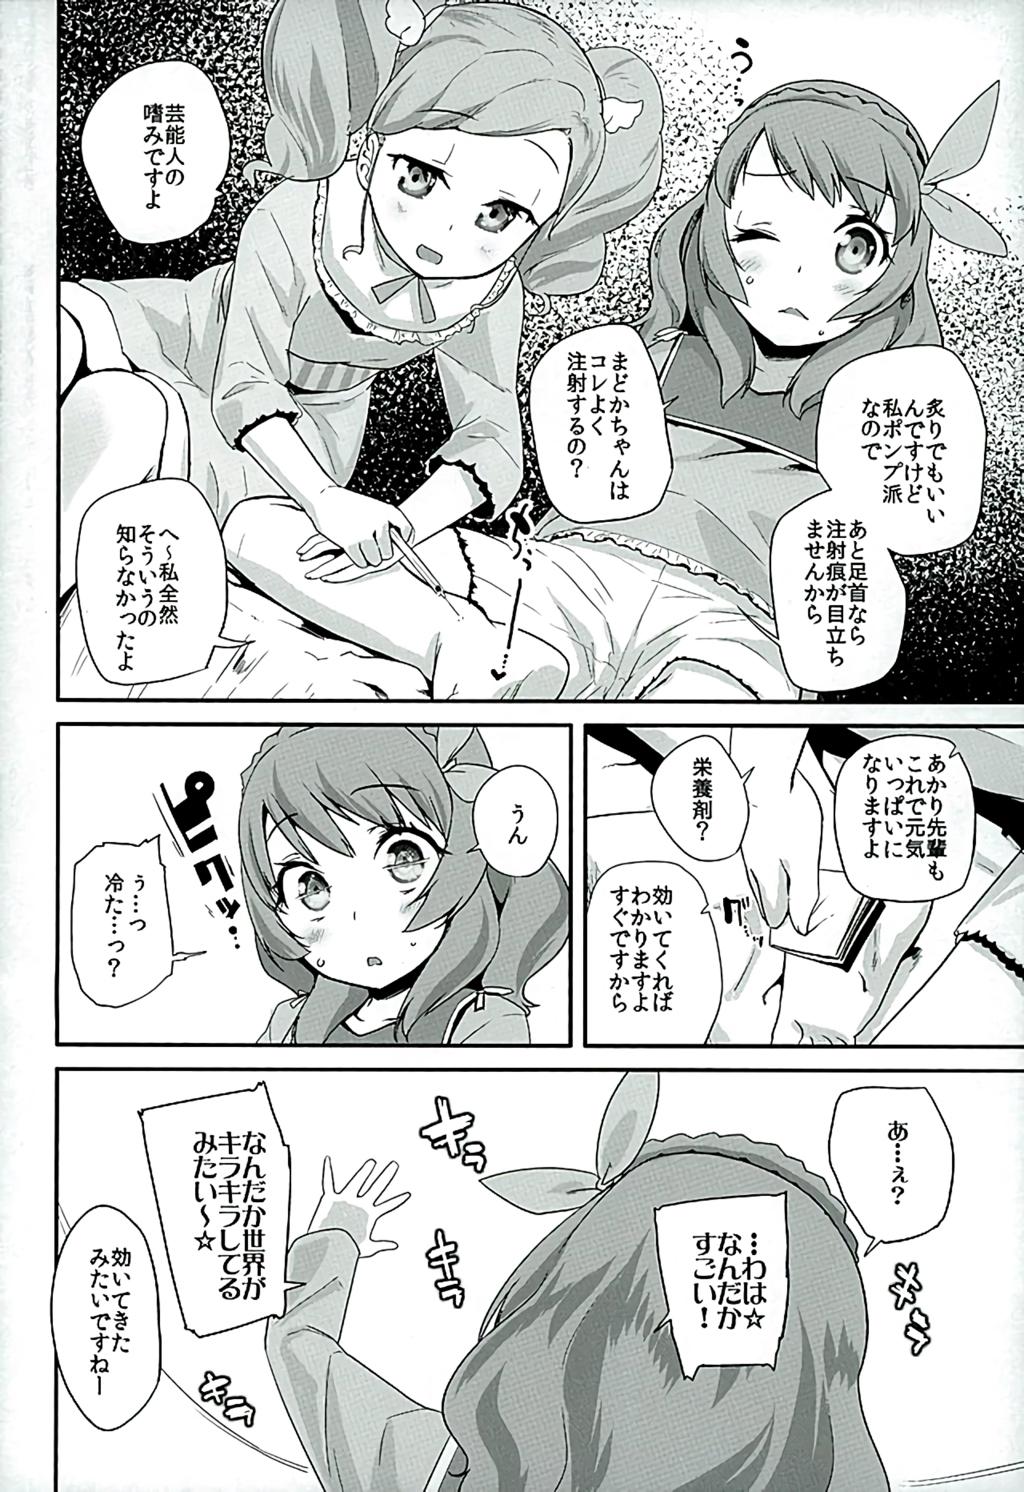 Young Tri Tri Trips! - Aikatsu Hermosa - Page 5